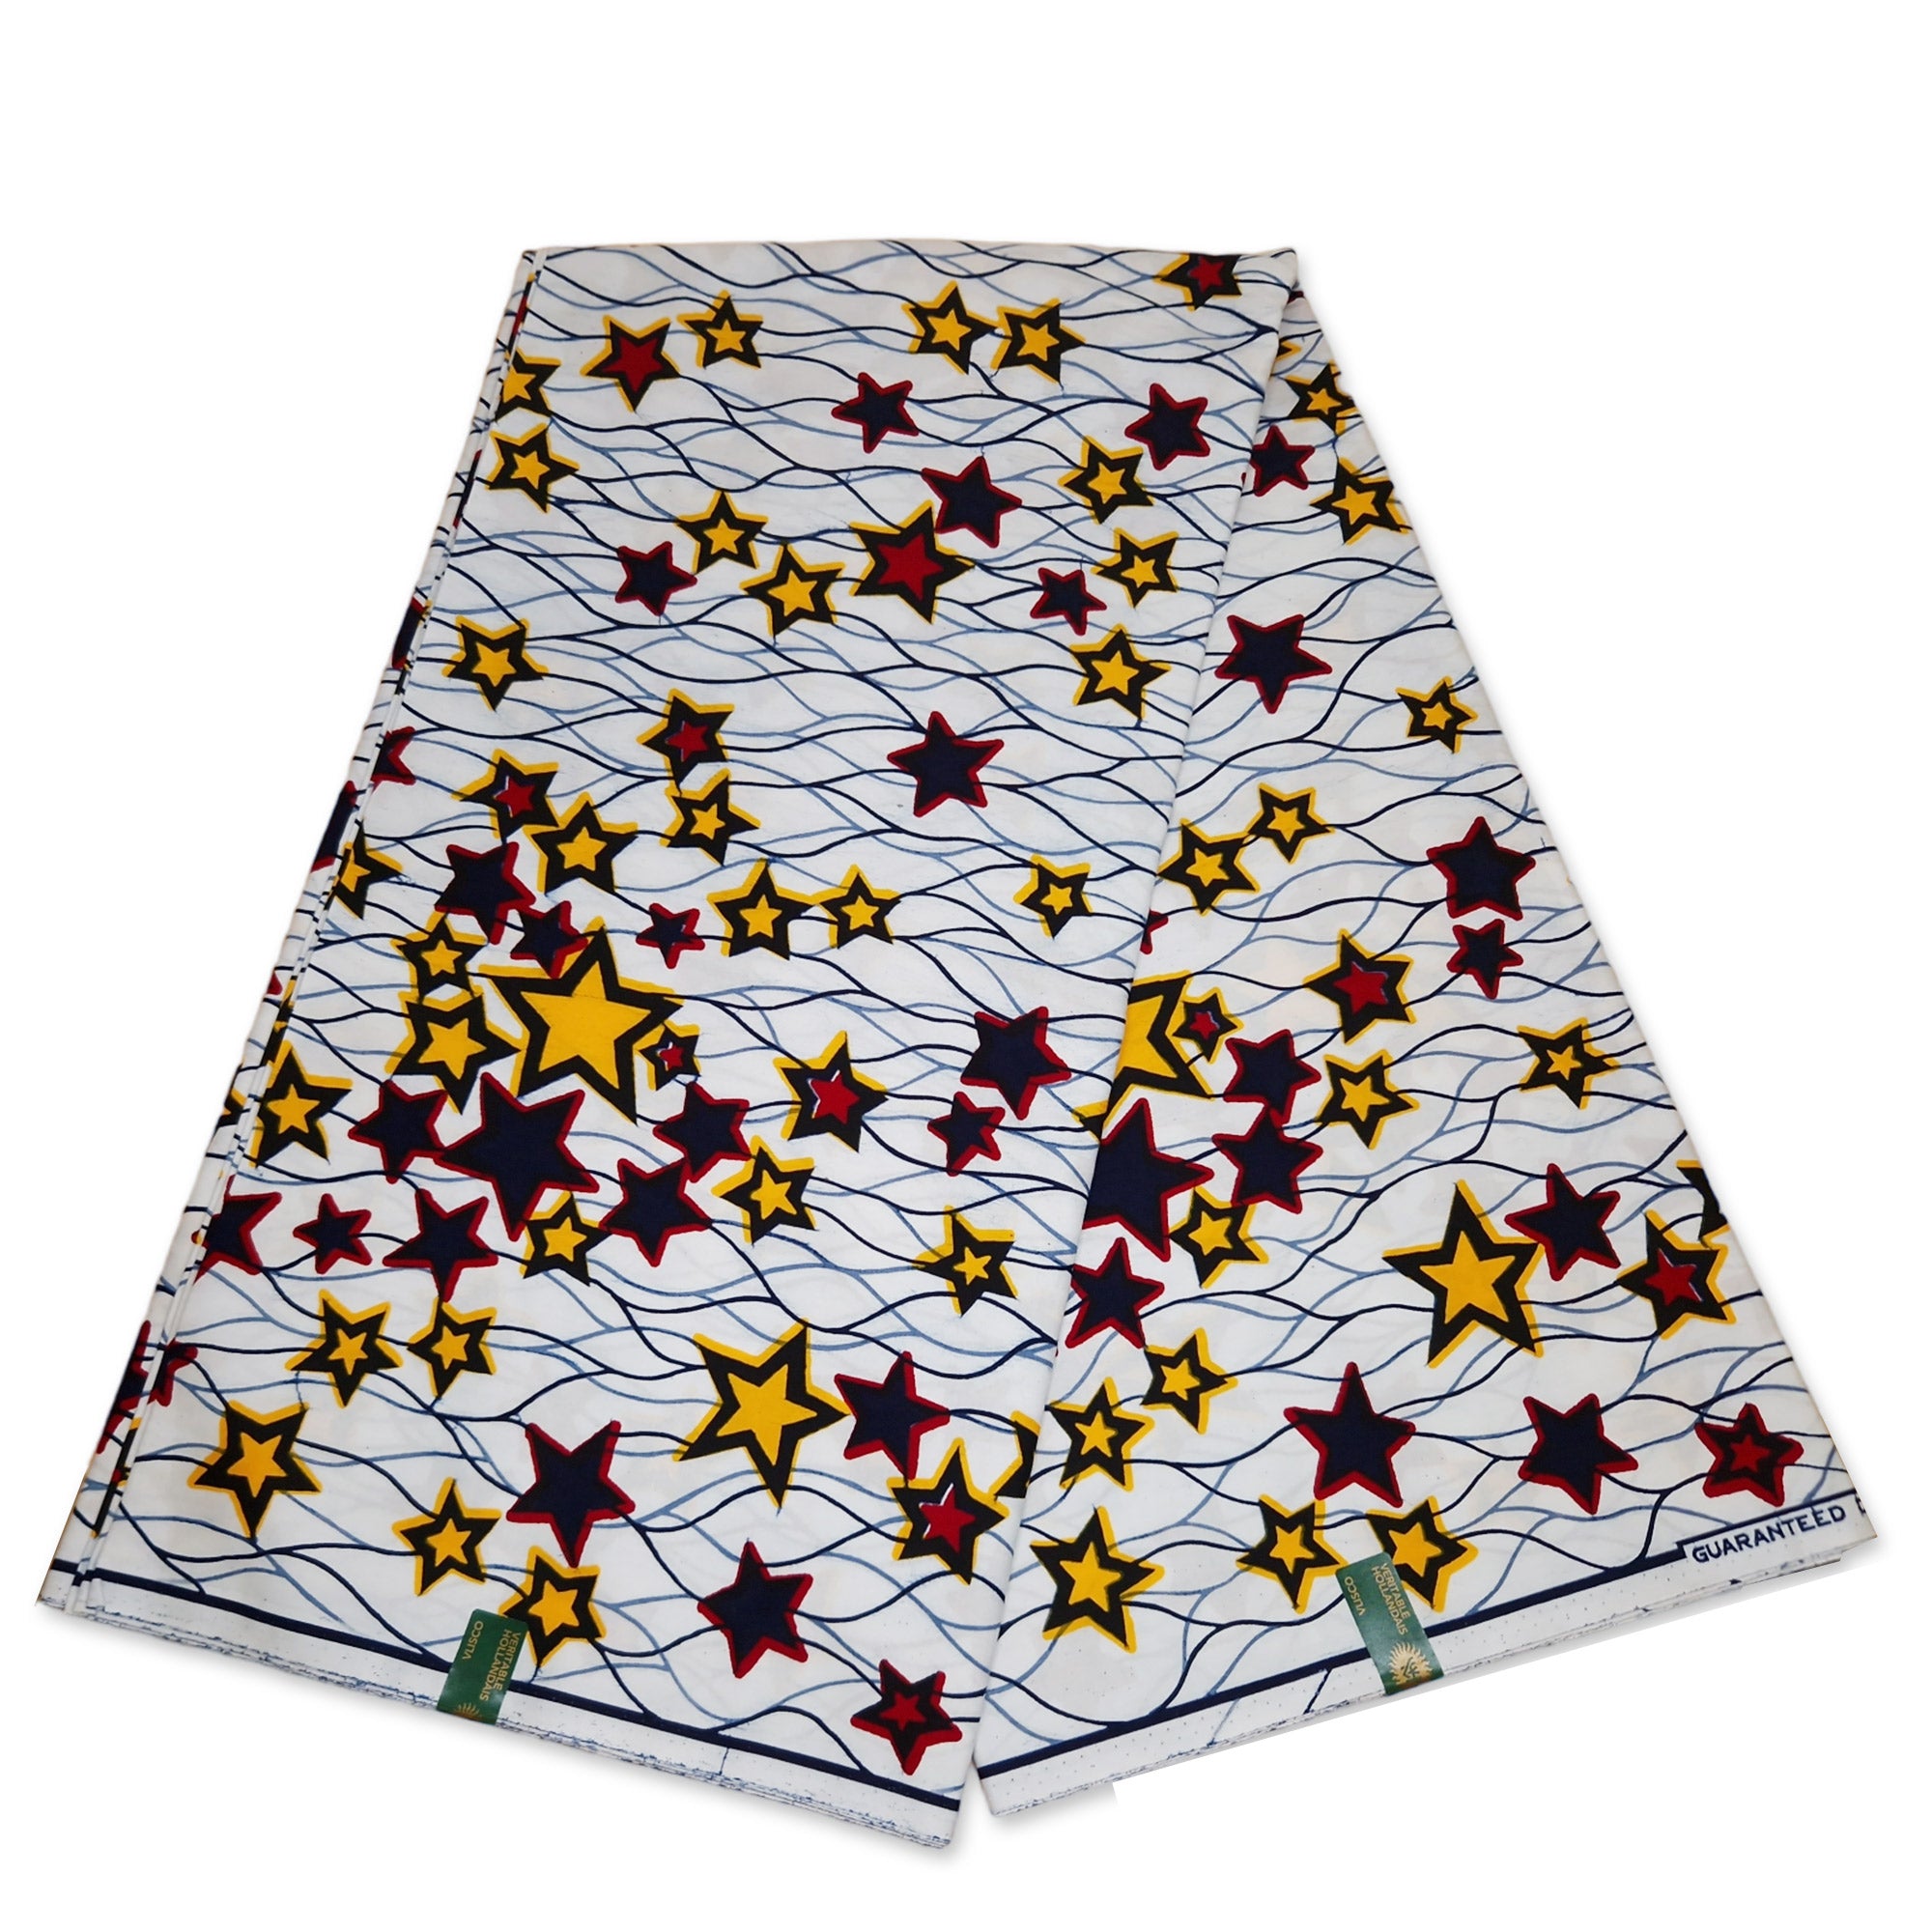 VLISCO Hollandais Wax print fabric - White / Red Yellow Stars